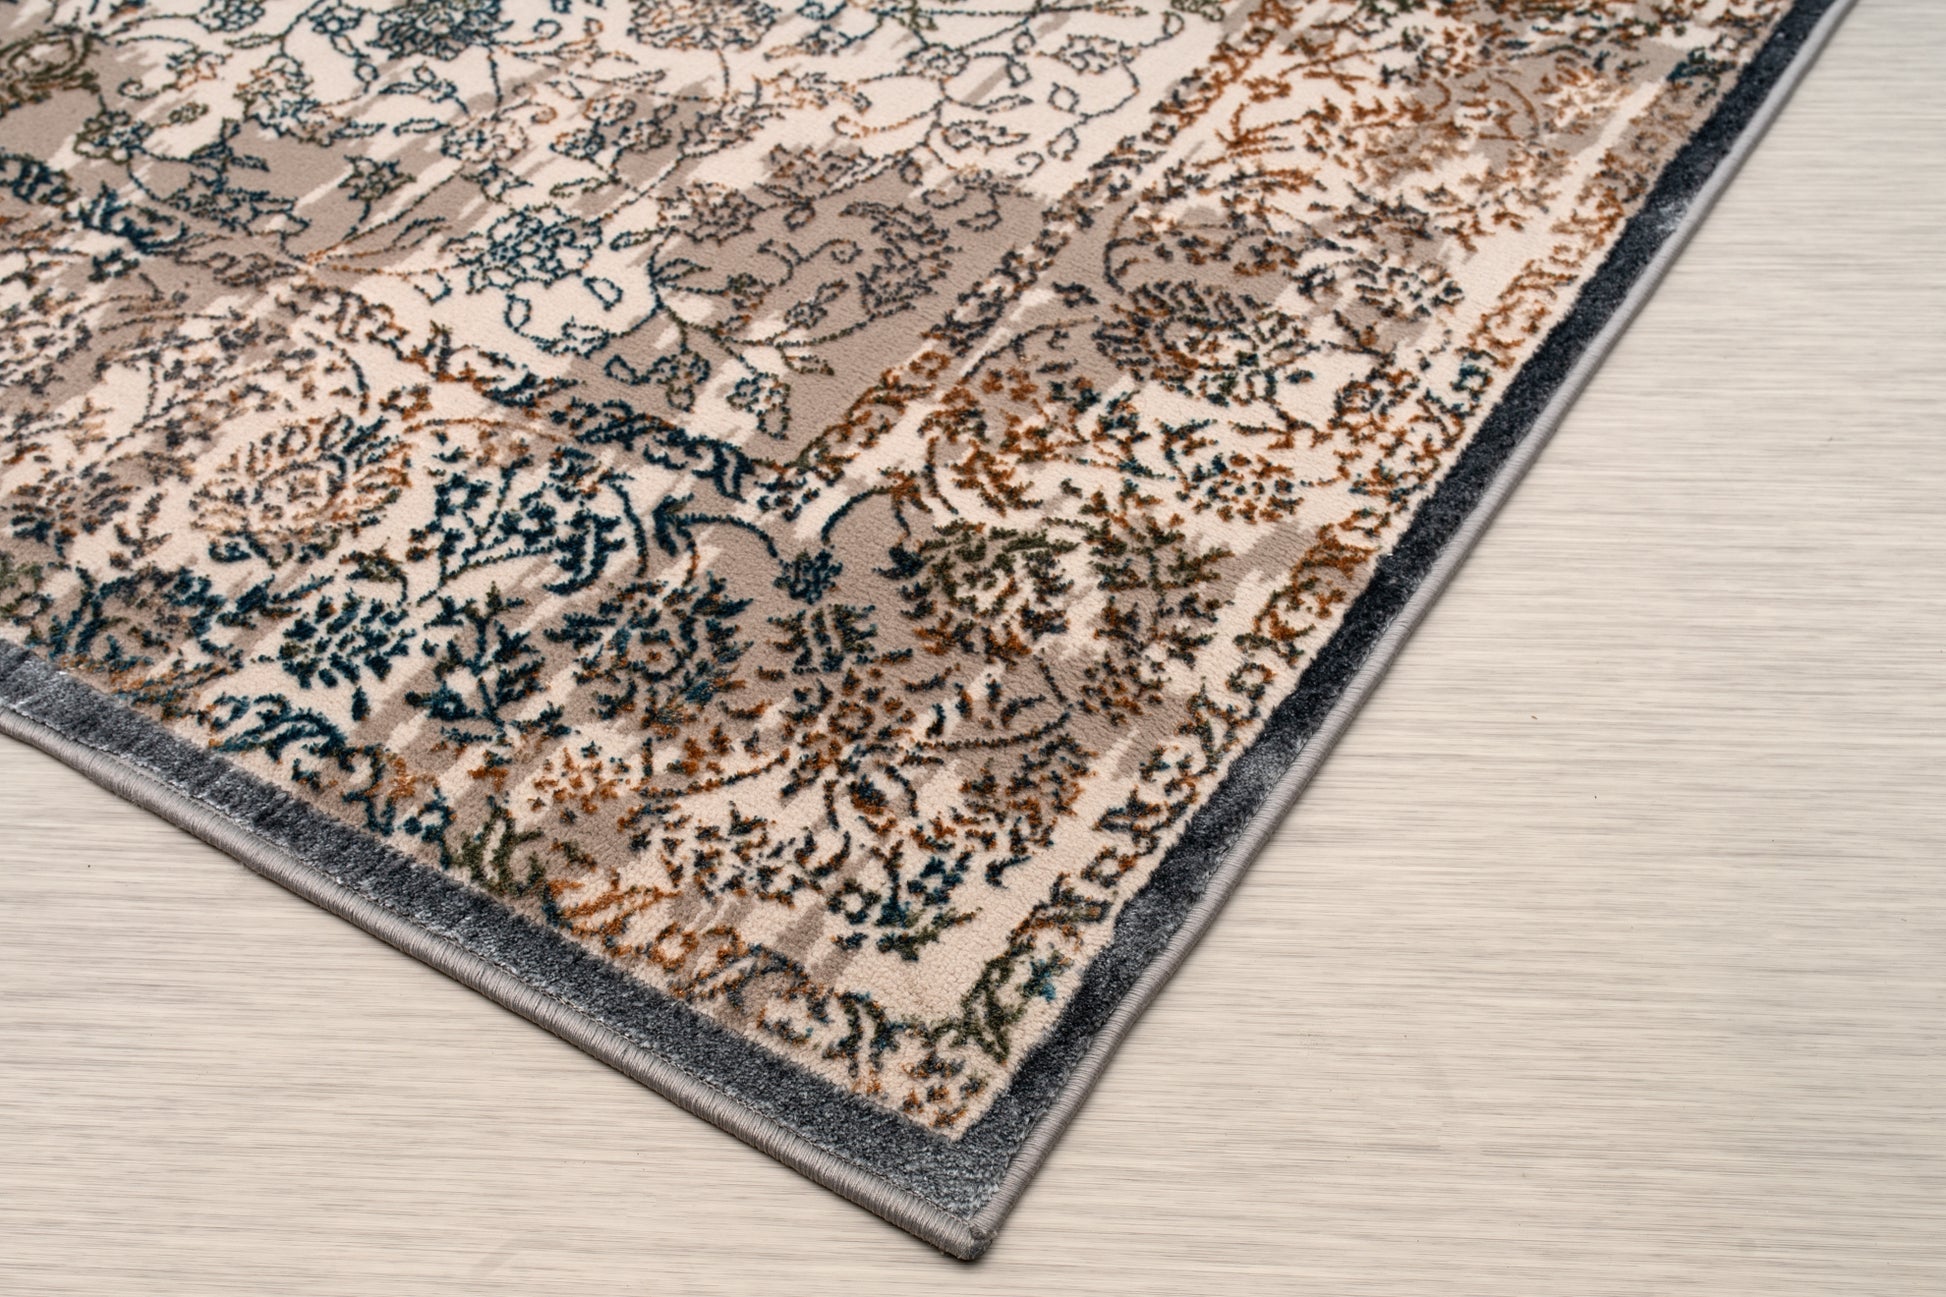 beige brown blue metalic traditional persian oriental contemporary area rug 9x12, 10x13 ft Large Big Carpet, Living Room, Beroom